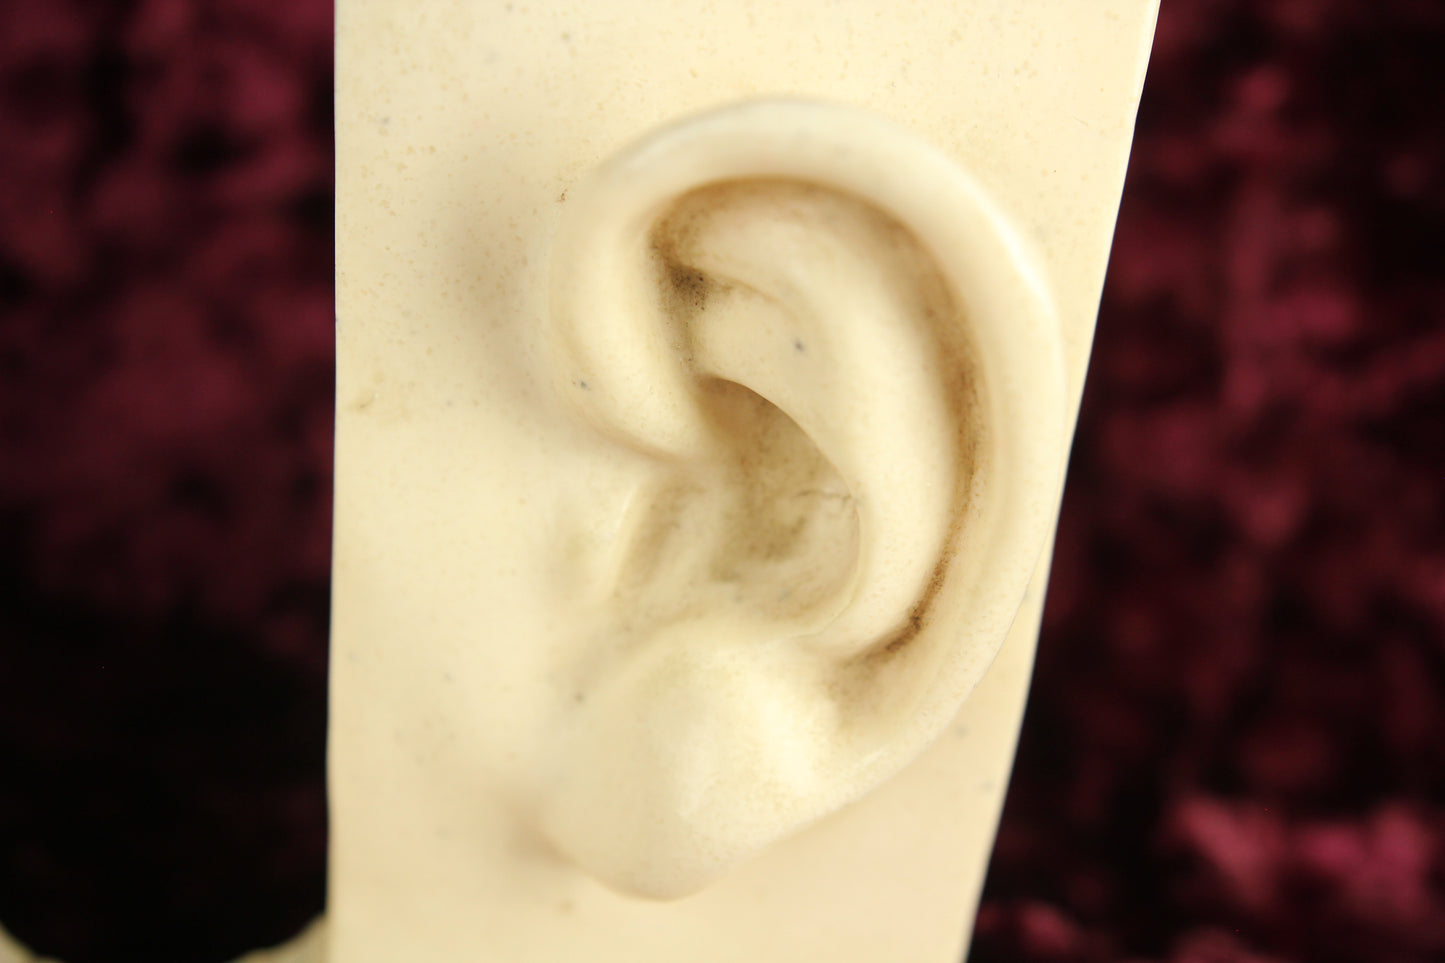 Vintage Pop Art Faux Marble Resin Ear Bookends by C2C Designs, Pair